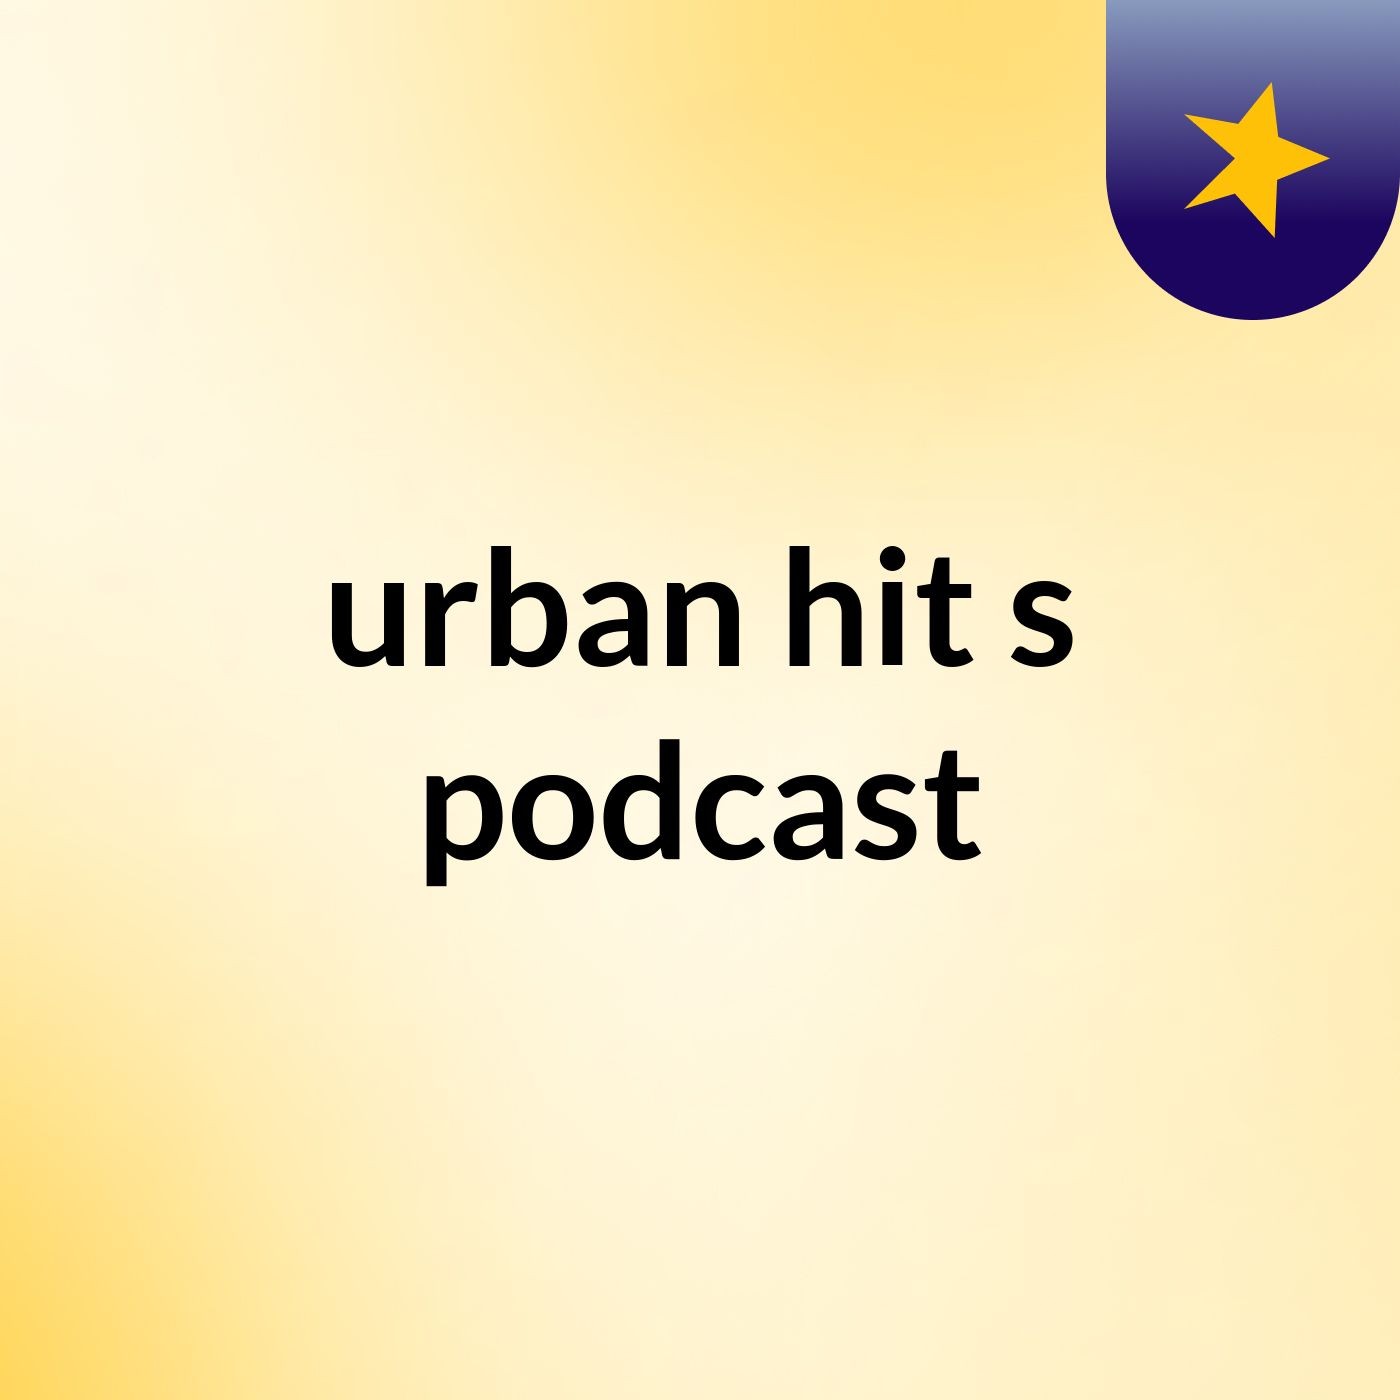 urban hit's podcast